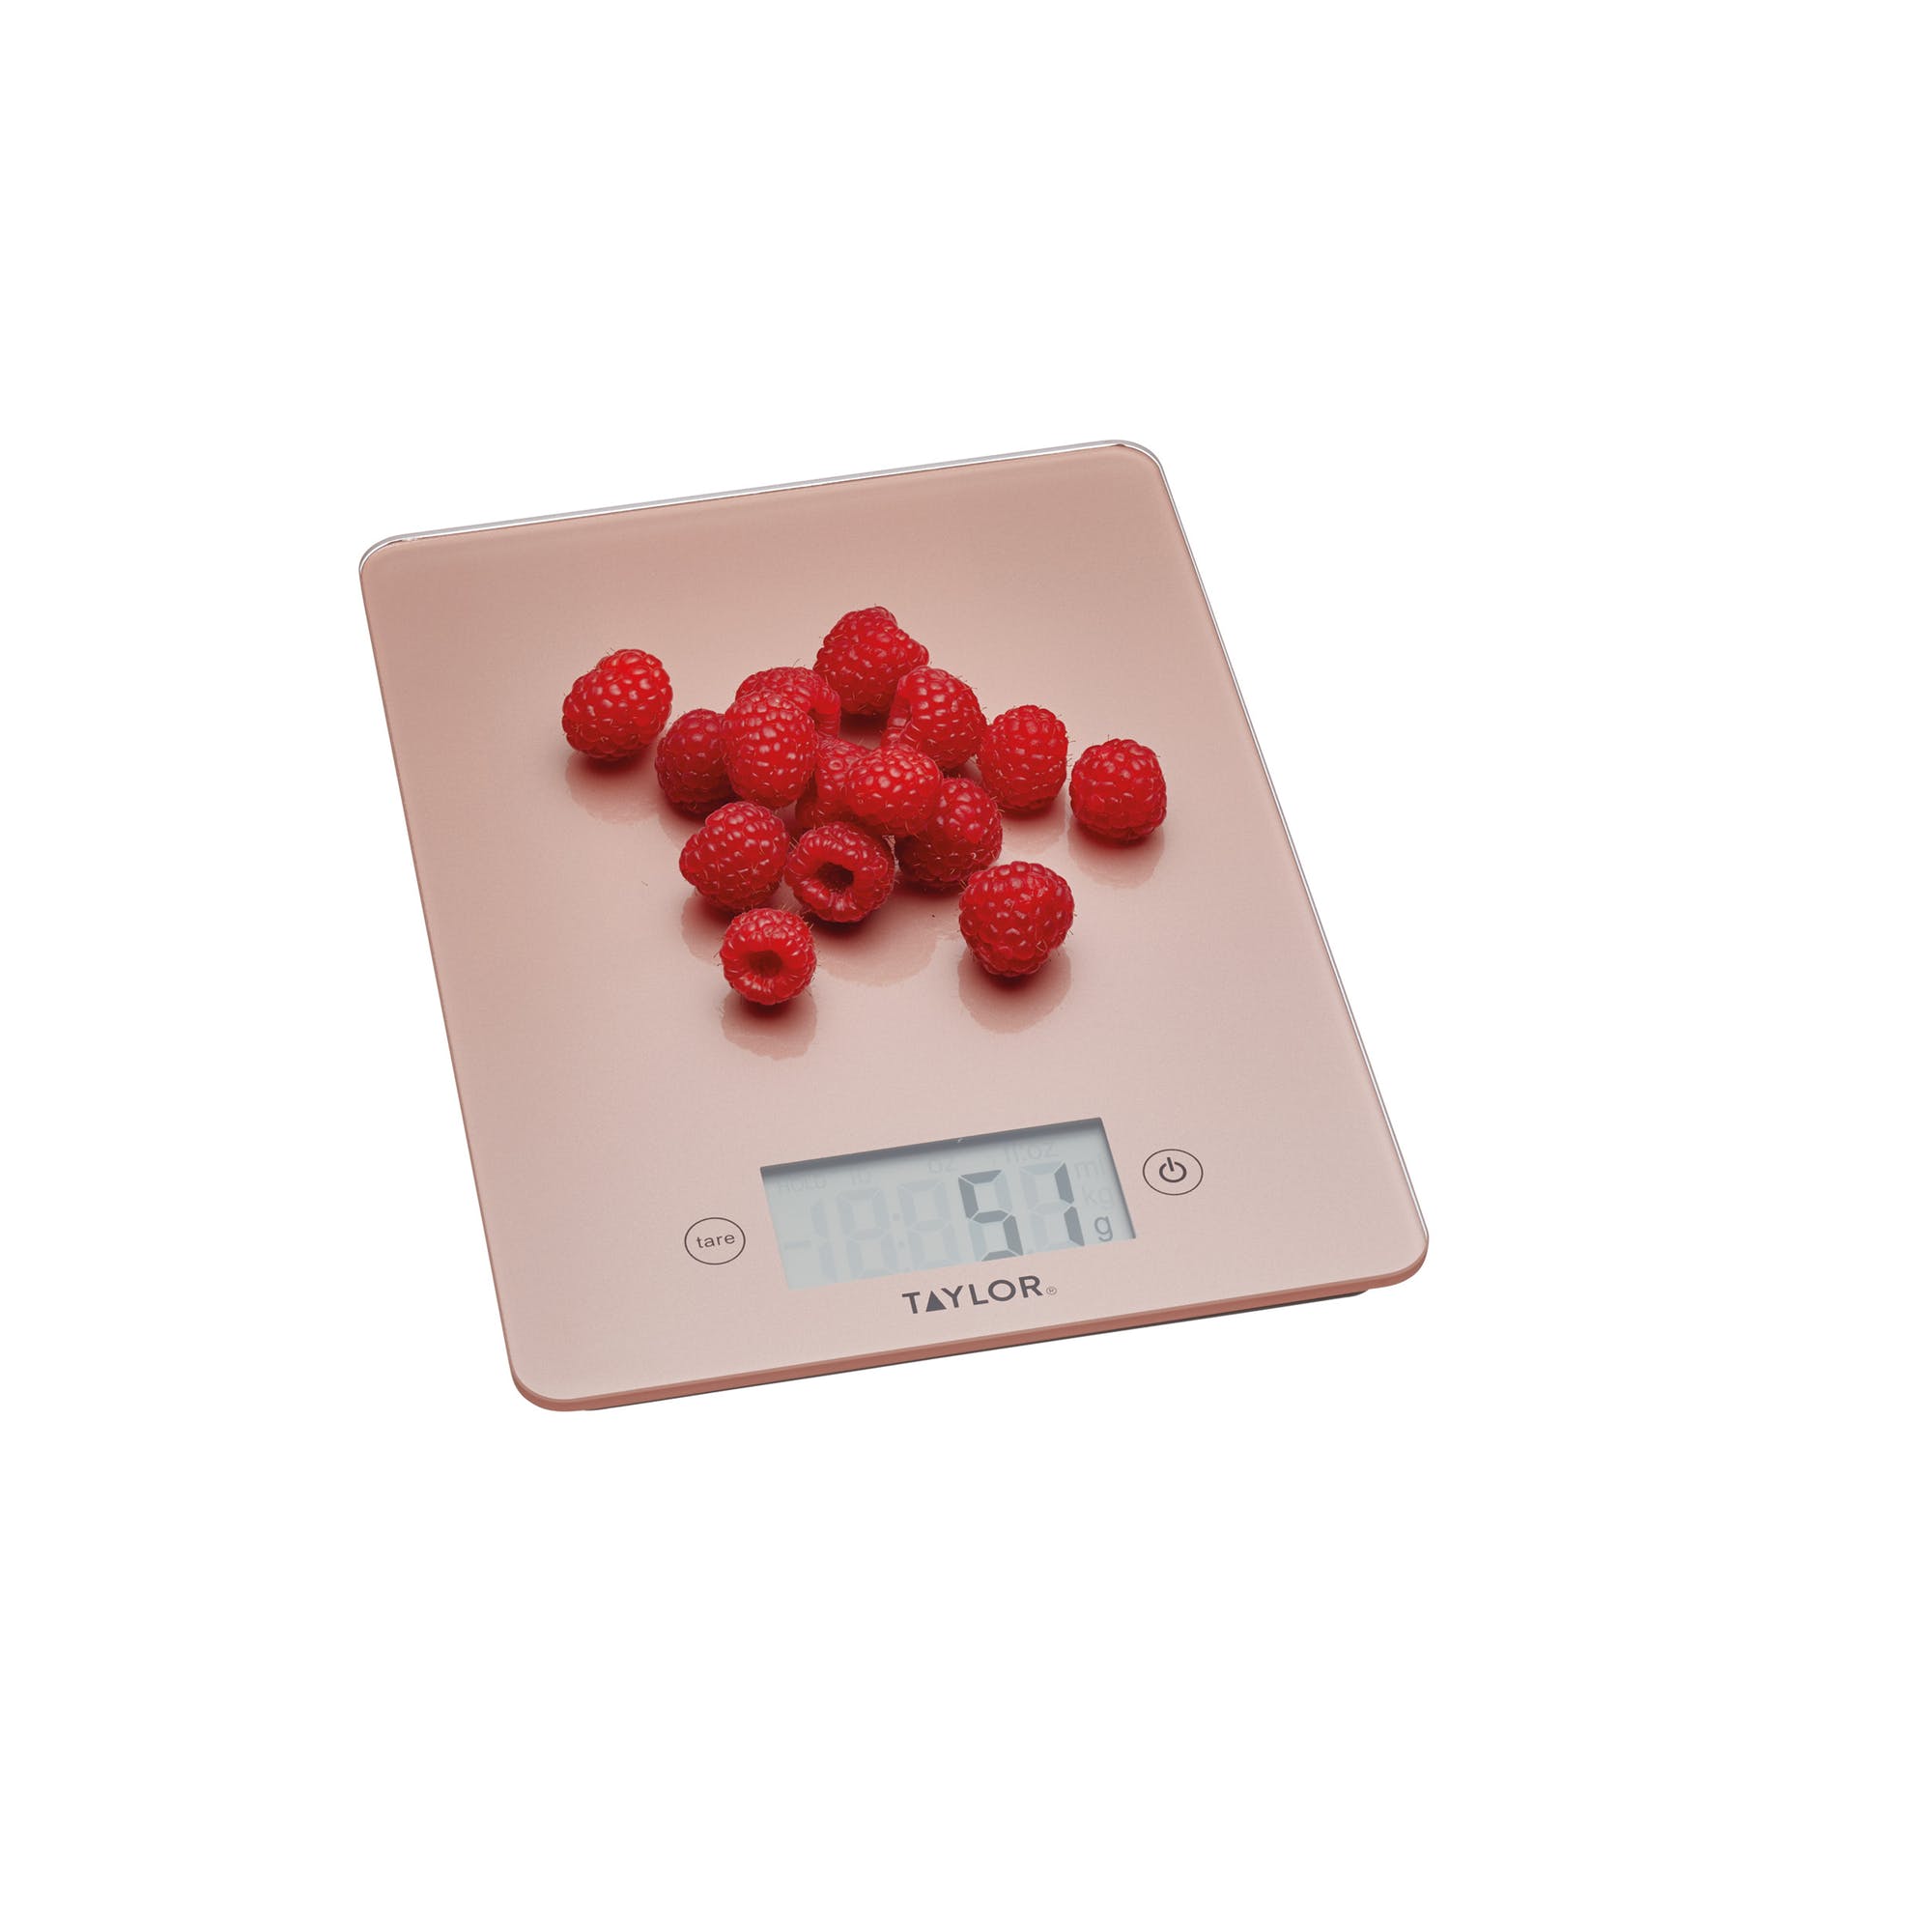 Taylor Pro Glass Digital 5Kg Kitchen Scales - Rose Gold - The Cooks Cupboard Ltd